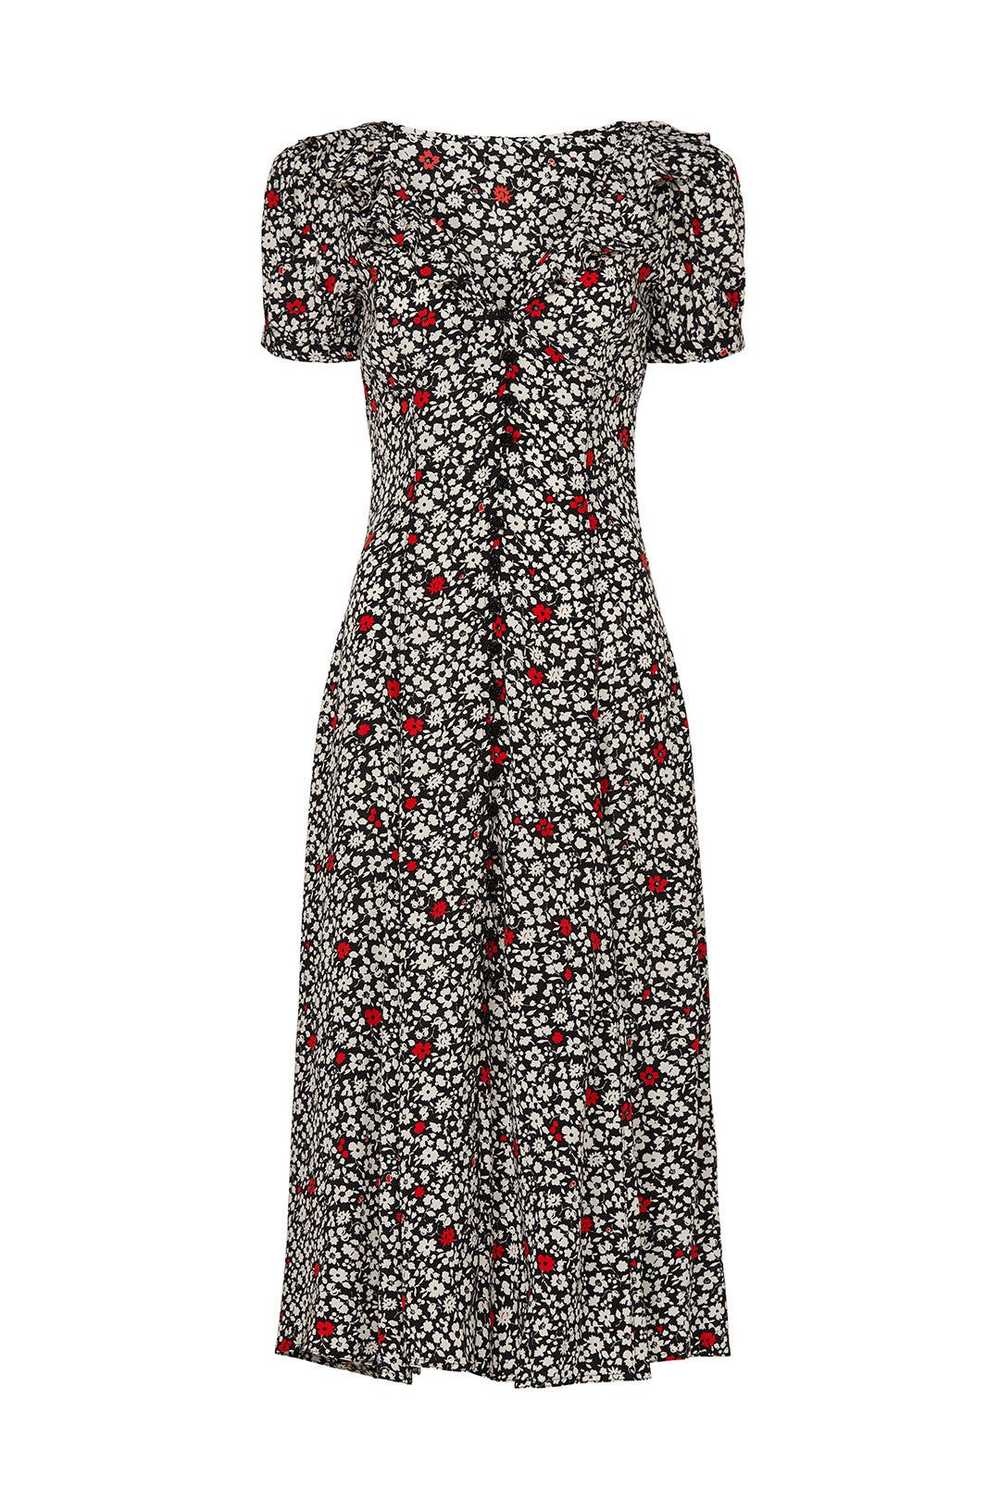 Polo Ralph Lauren Black Floral Short Sleeves Dress - image 5